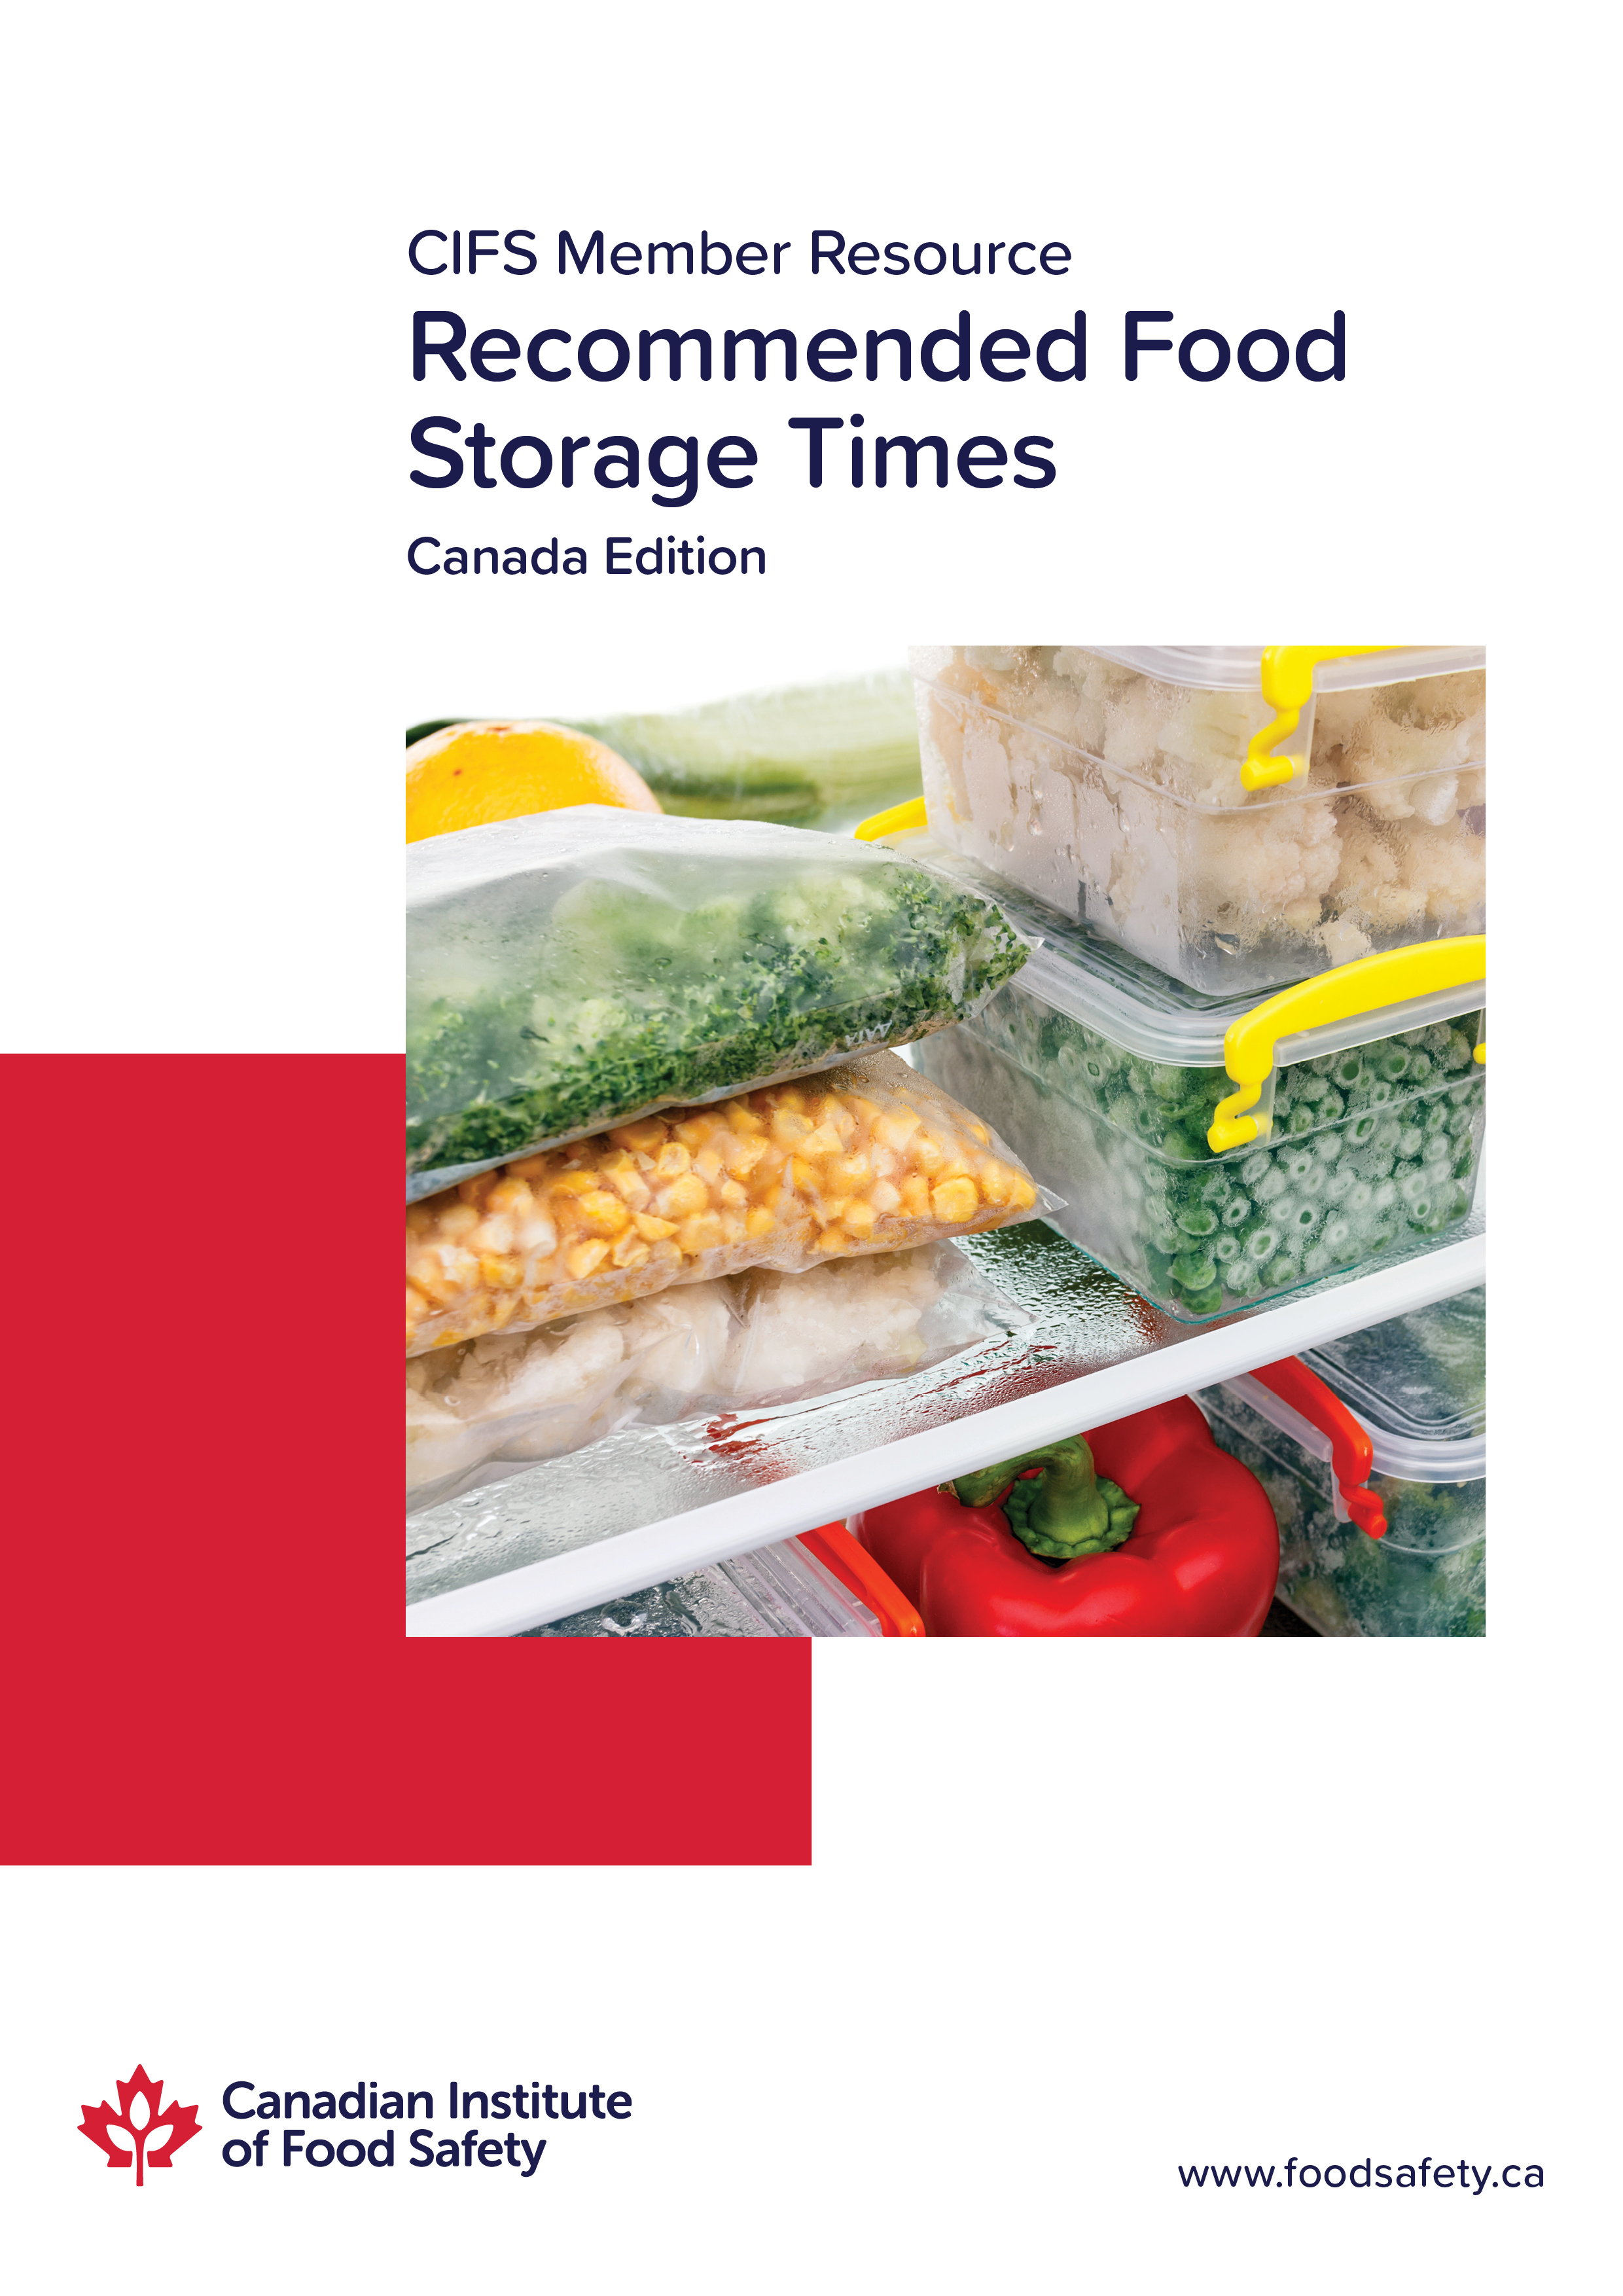 Proper Food Storage